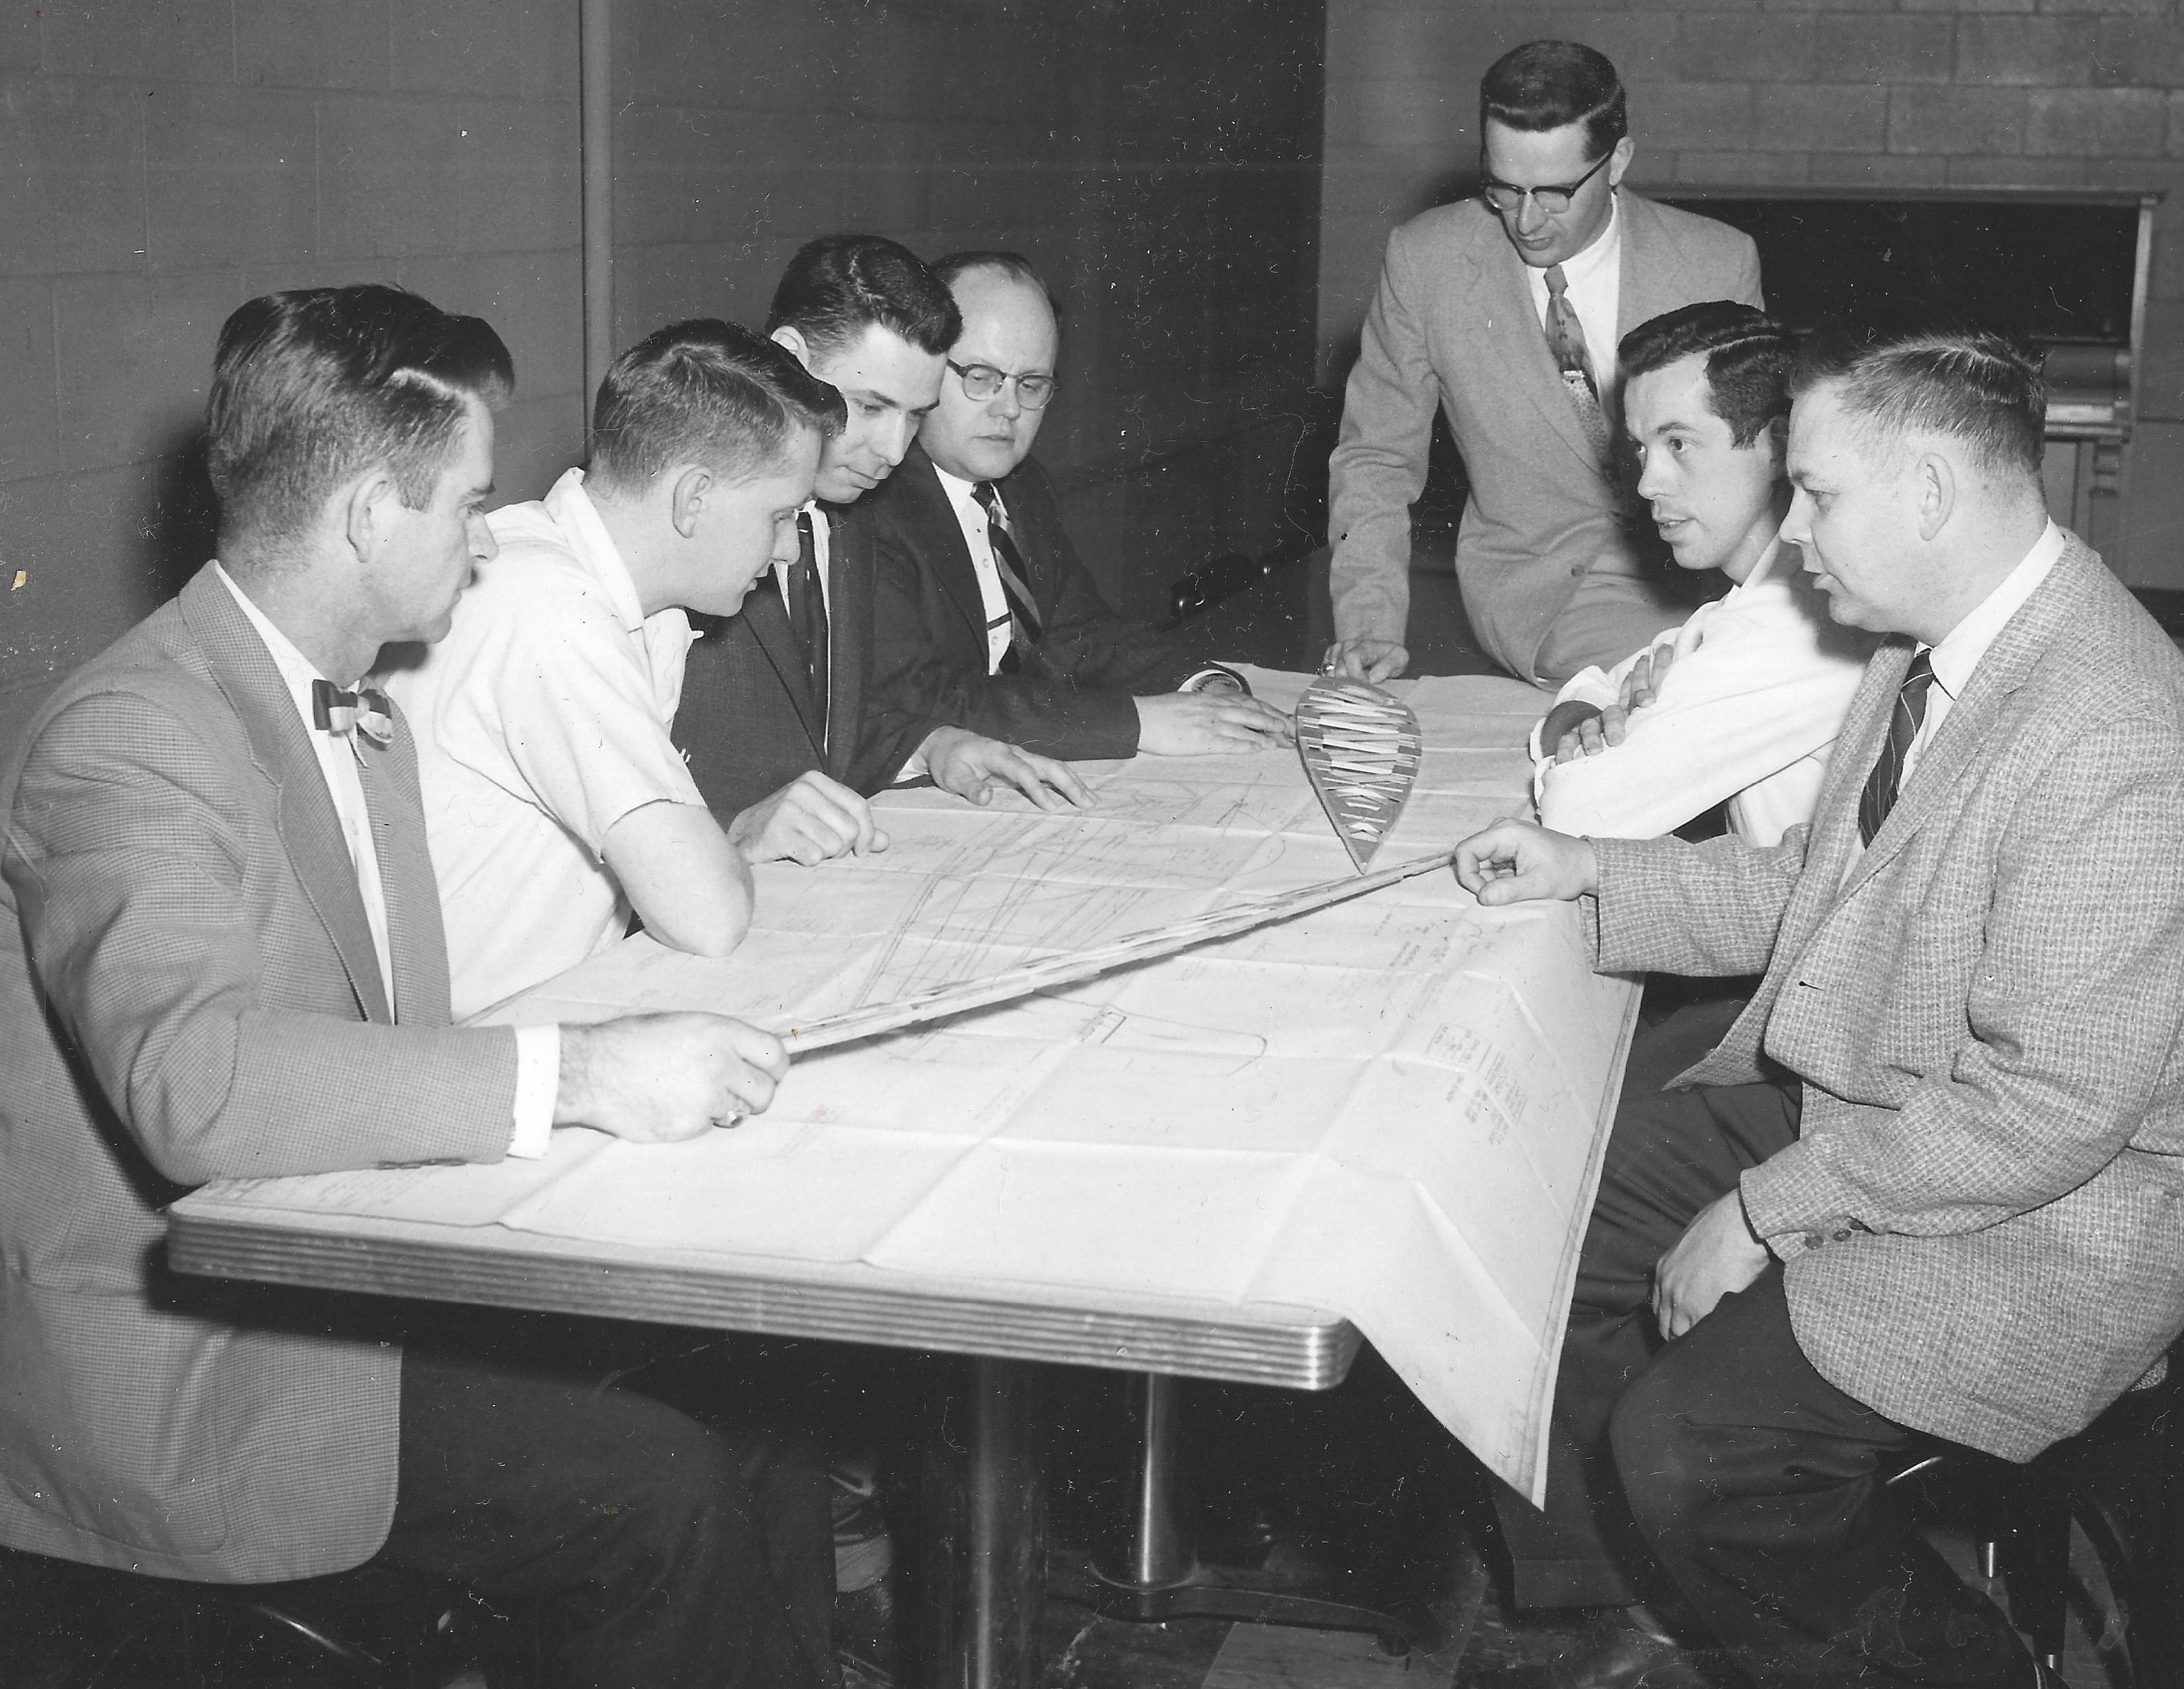 Left to right: Don Keating, Bob Okoneski, President Chet Klier, Bill Wylaw, Jesse Black, Harold Elig, Roger Gardner. May 1960